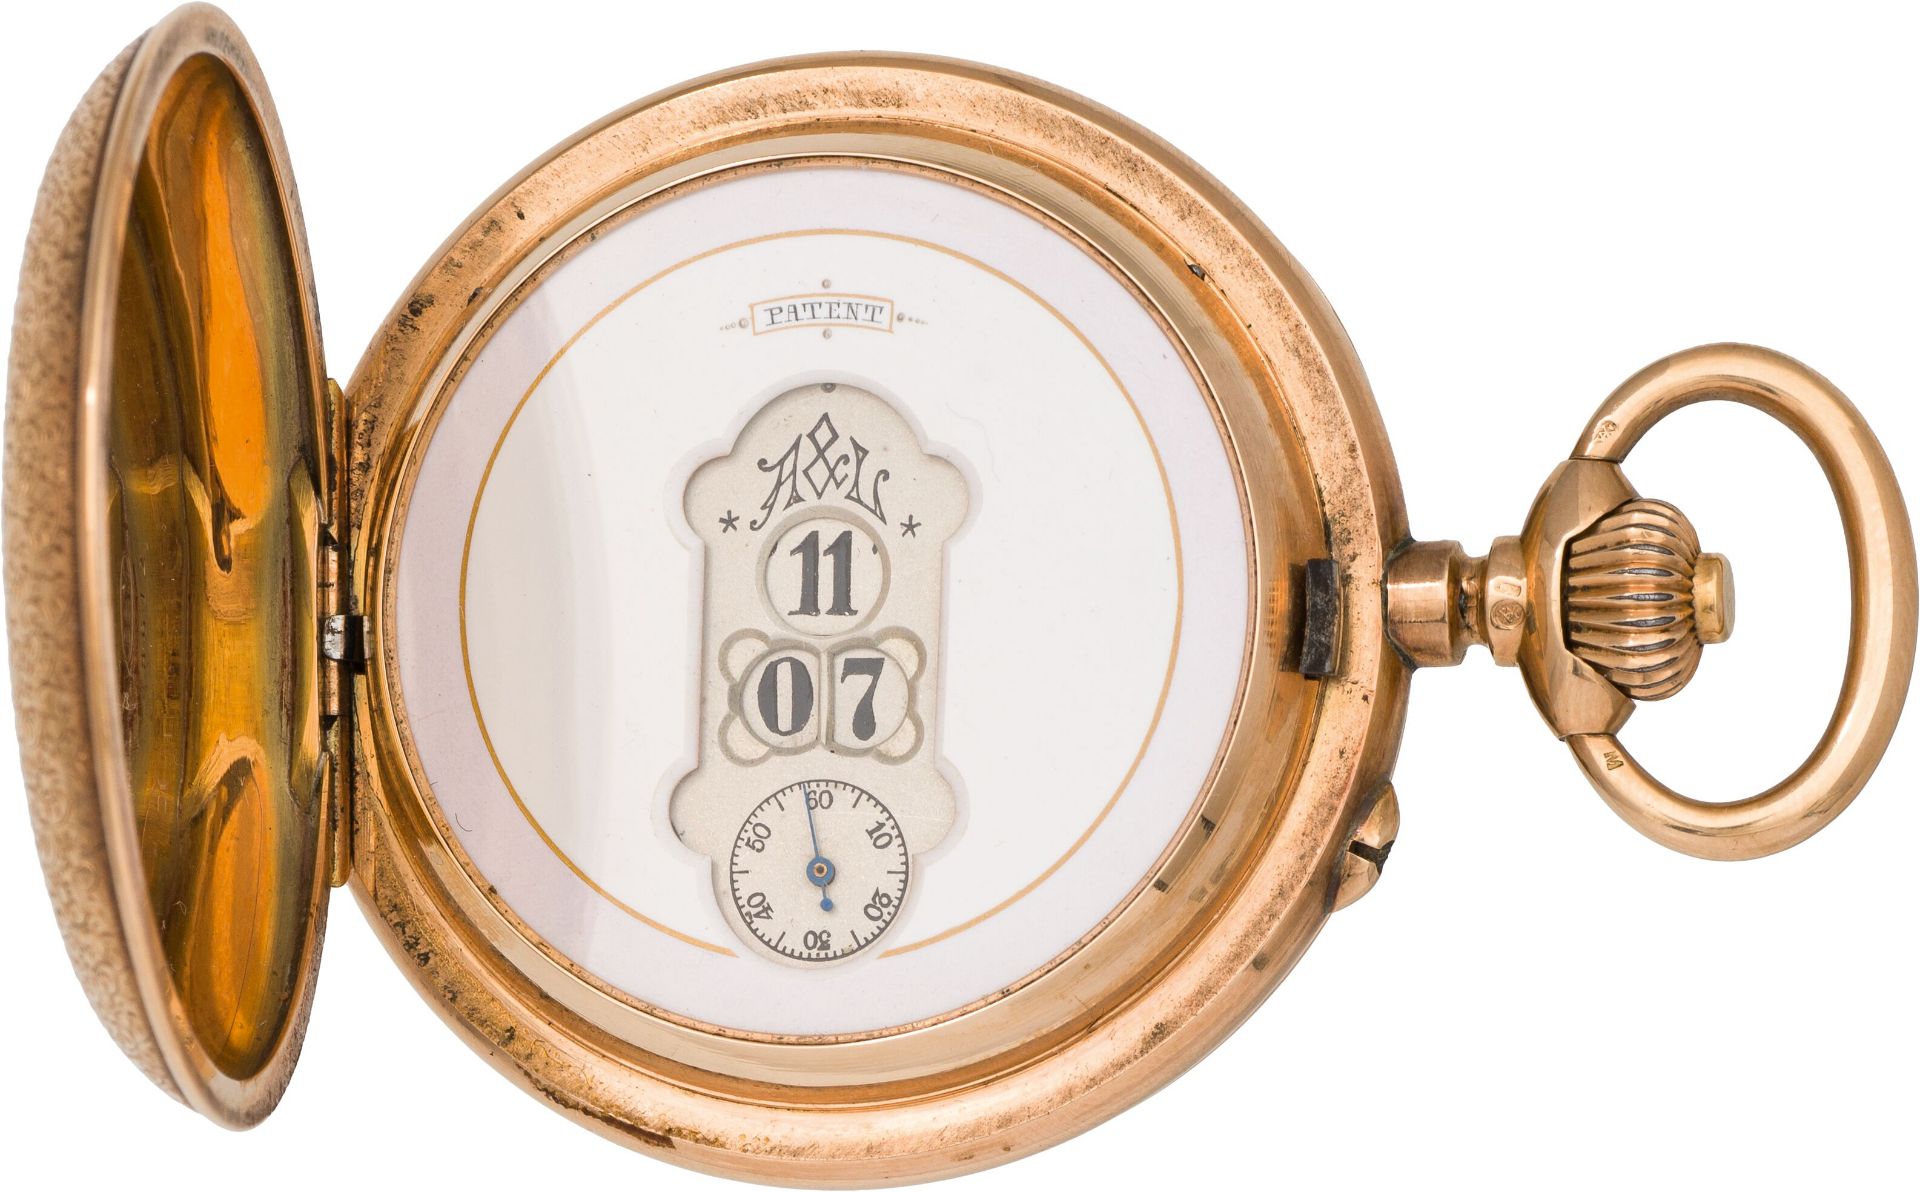 Pocket watchAeby & Landry, Switzerland, c. 188514k gold; crown winding mechanism, rich guilloché